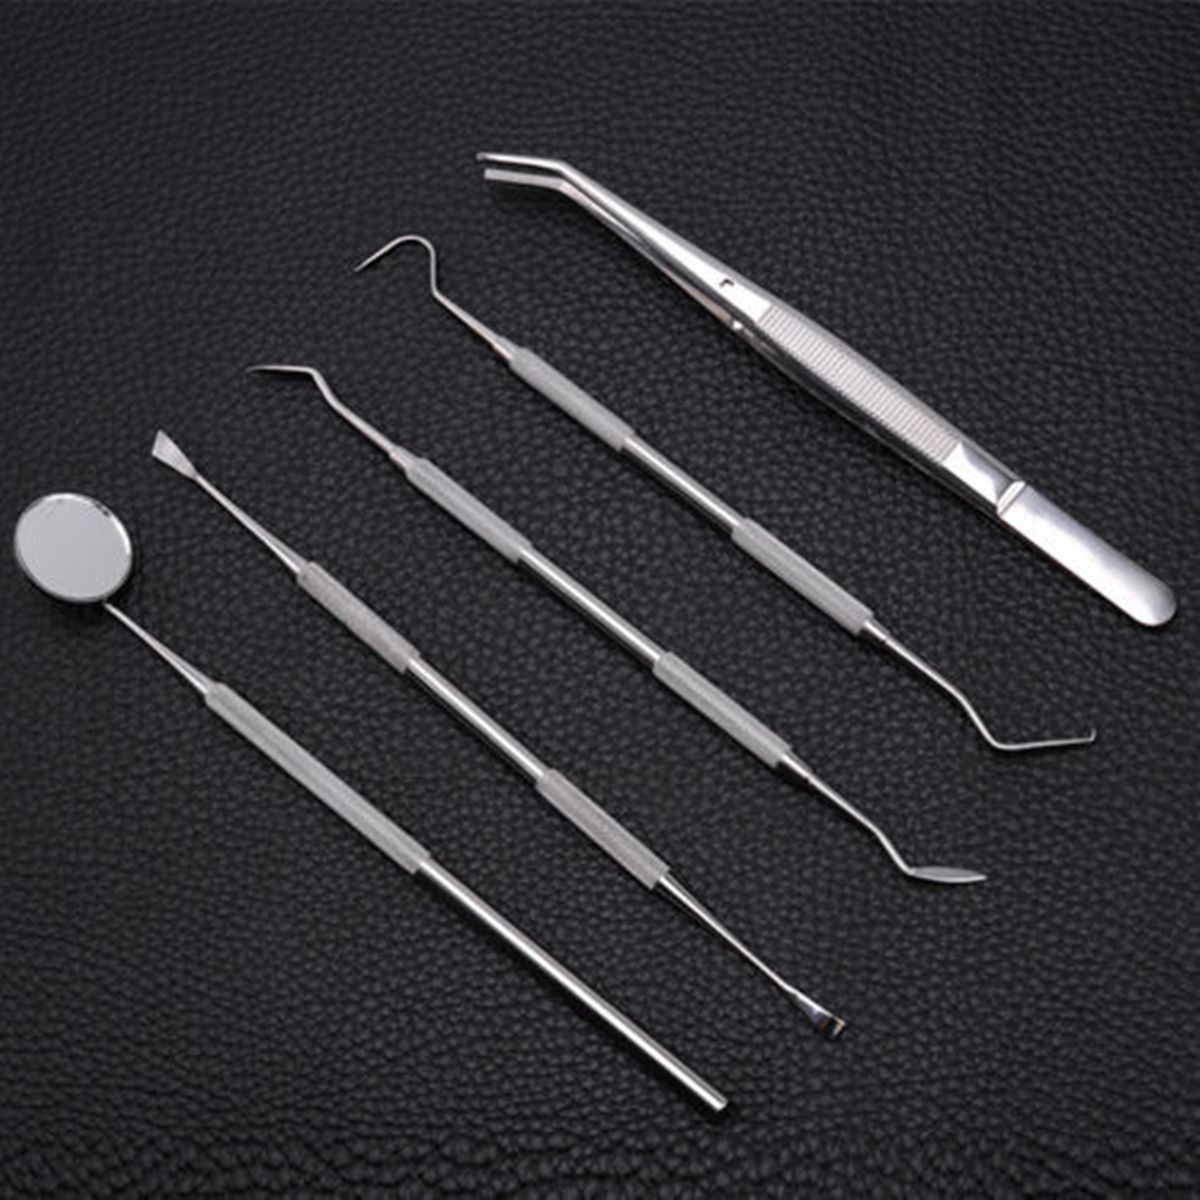 5pcs-Handle-Stainless-Dental-Tools-Kit-Dentist-Teeth-Clean-Hygiene-Picks-Mirror-Tool-1252773